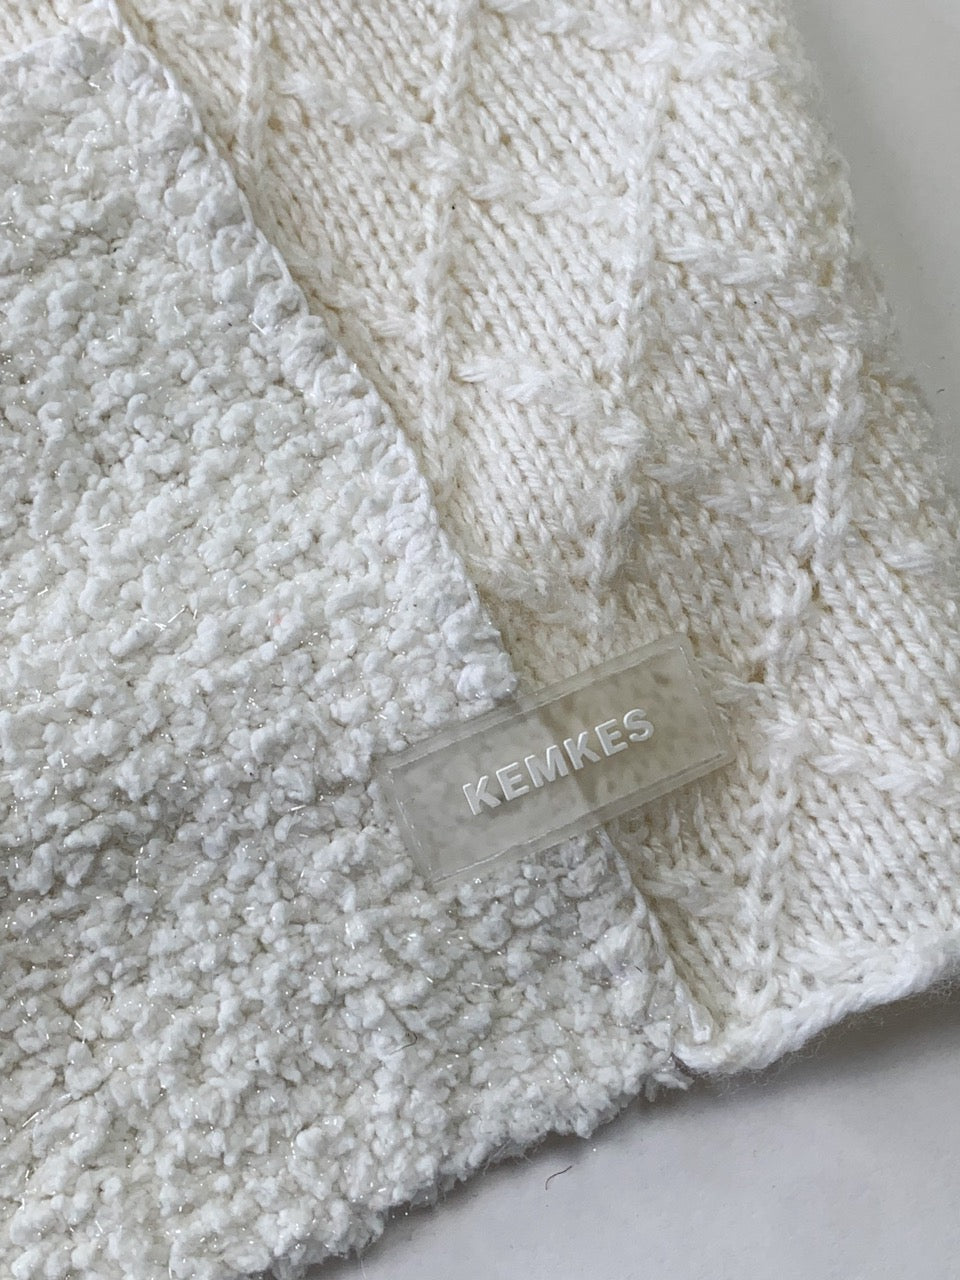 Spencer white patchwork knit